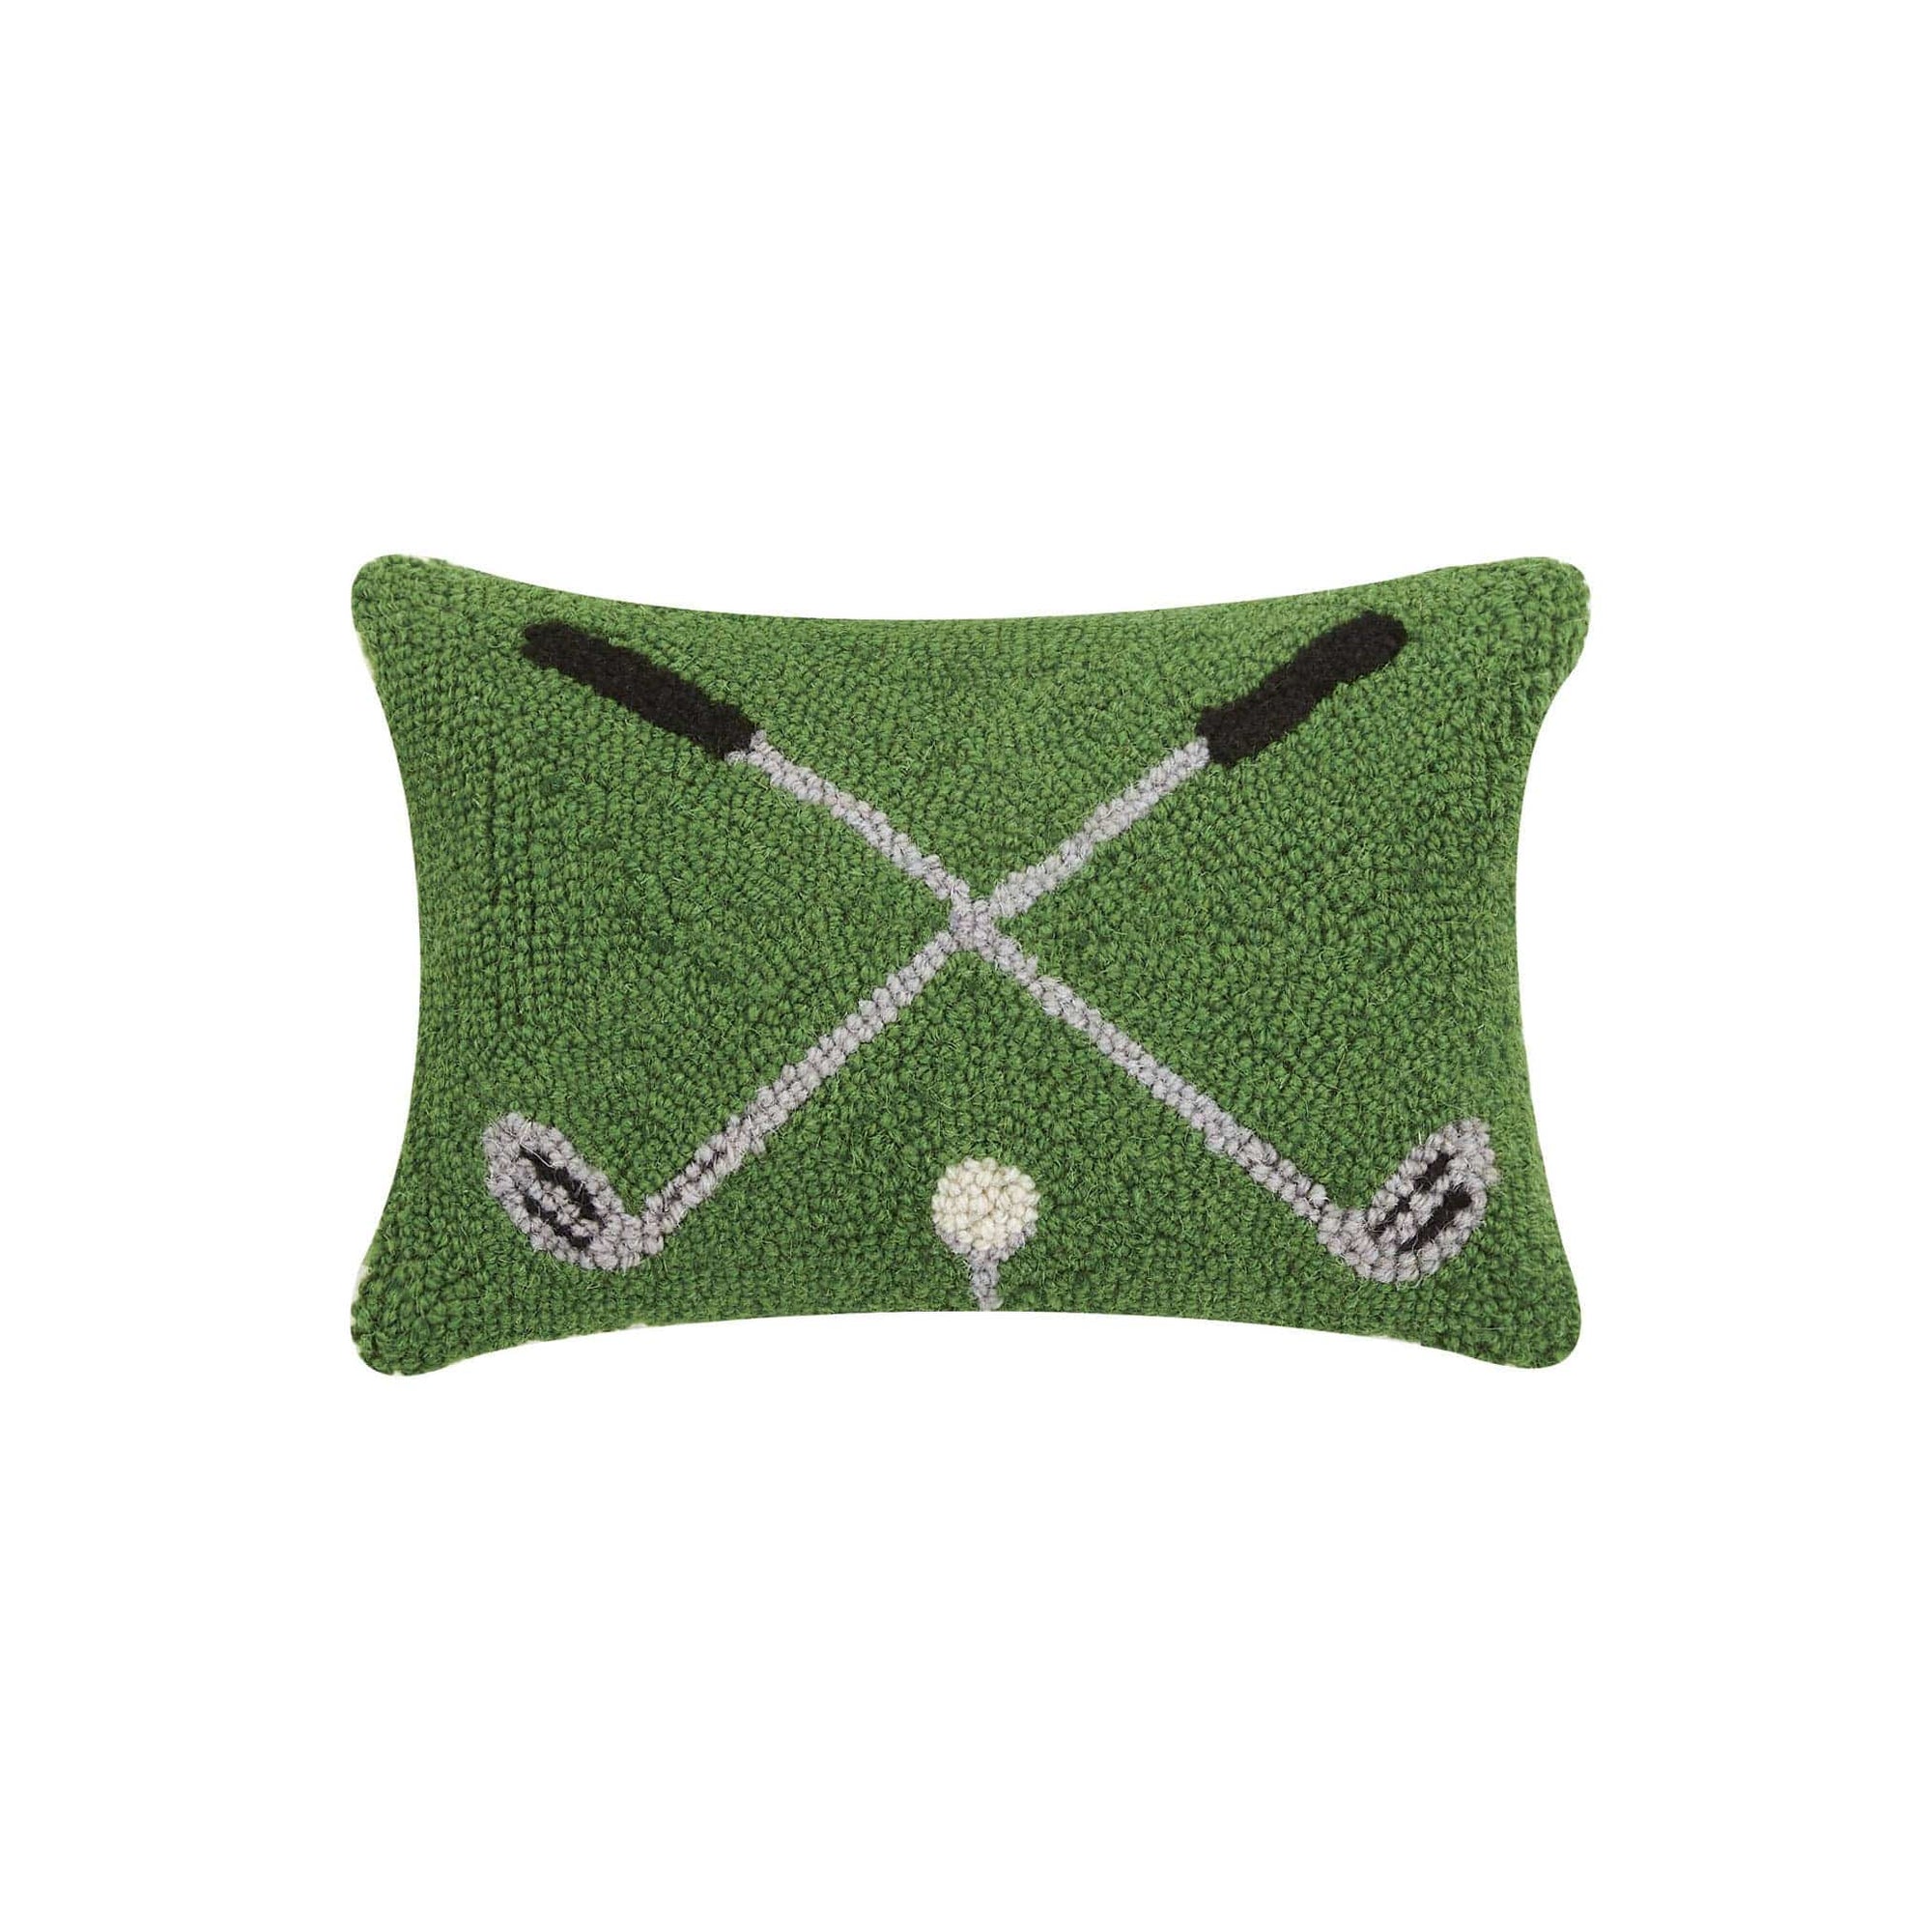 Cross Golf Clubs Hook Pillow - The Preppy Bunny